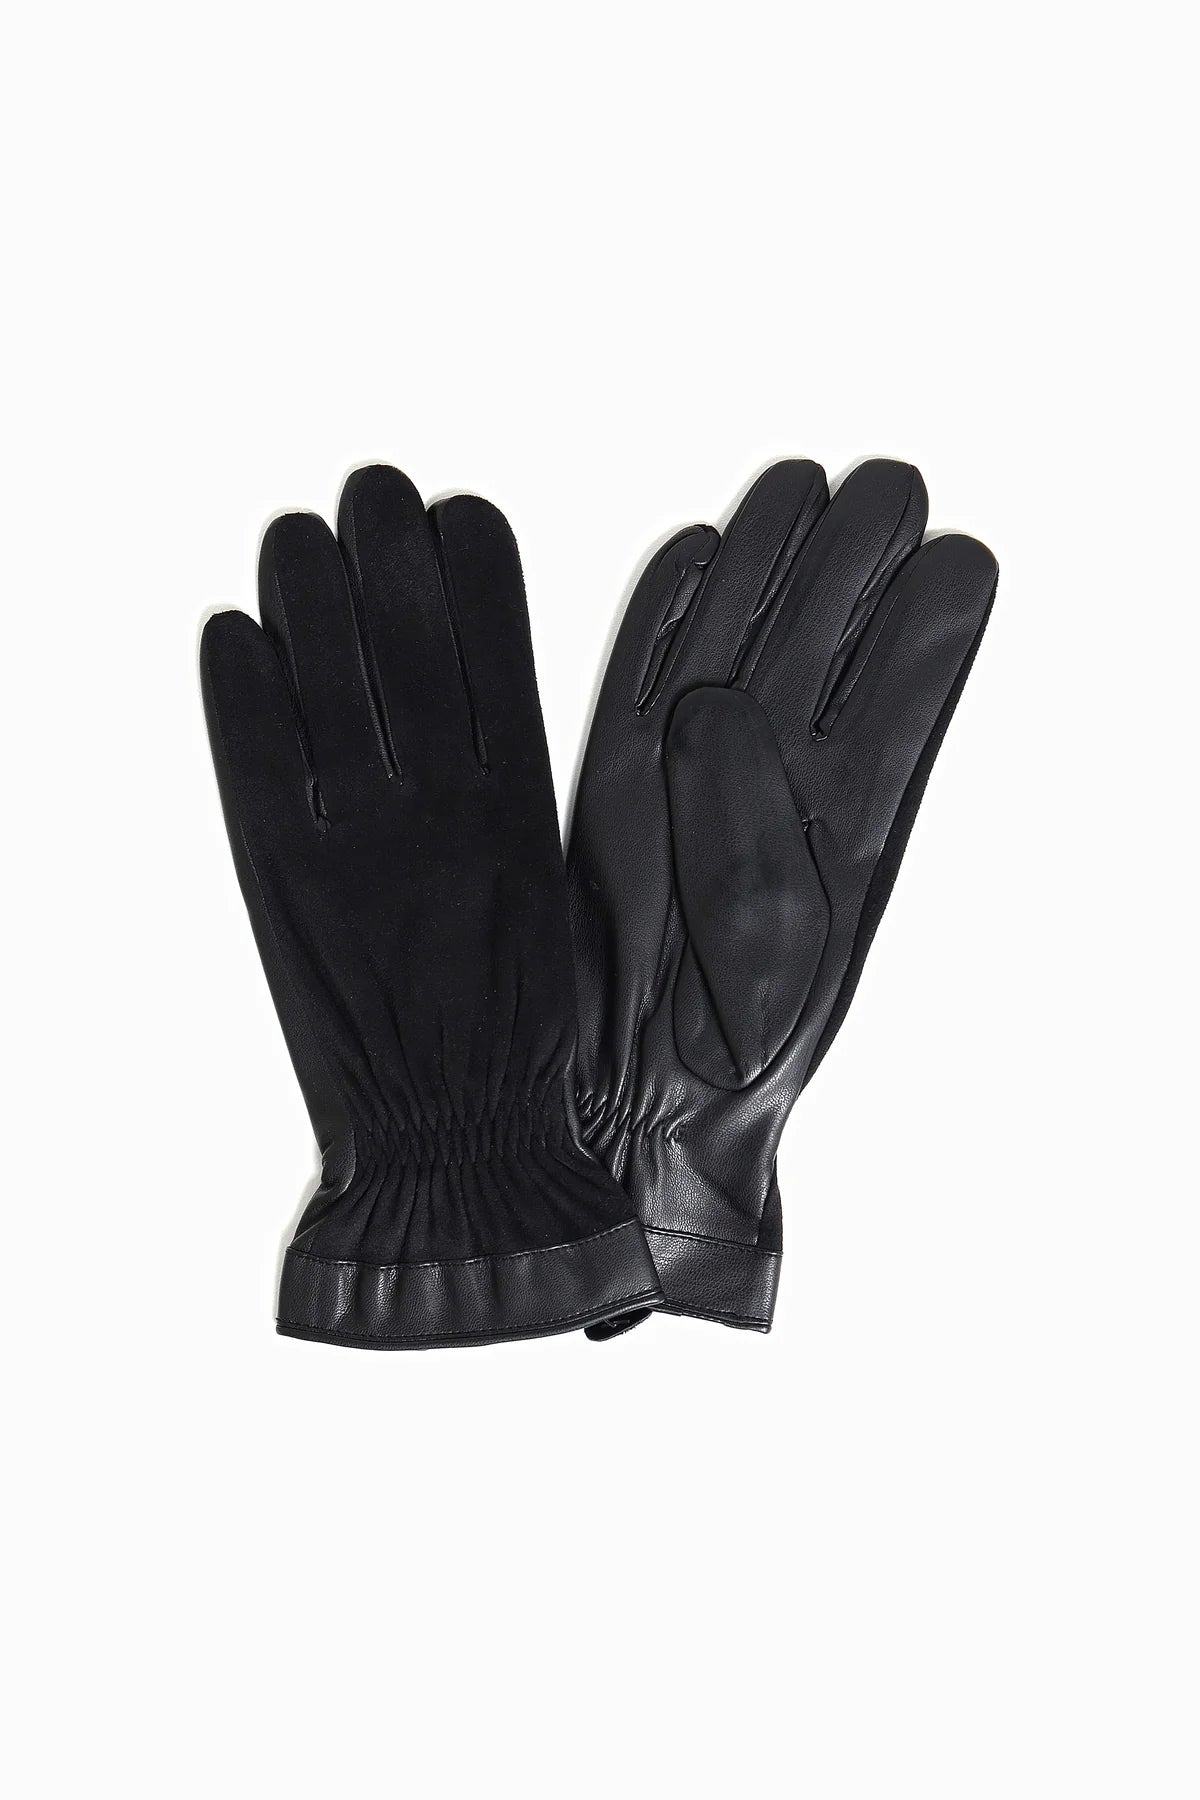 The Vegan Leather Glove